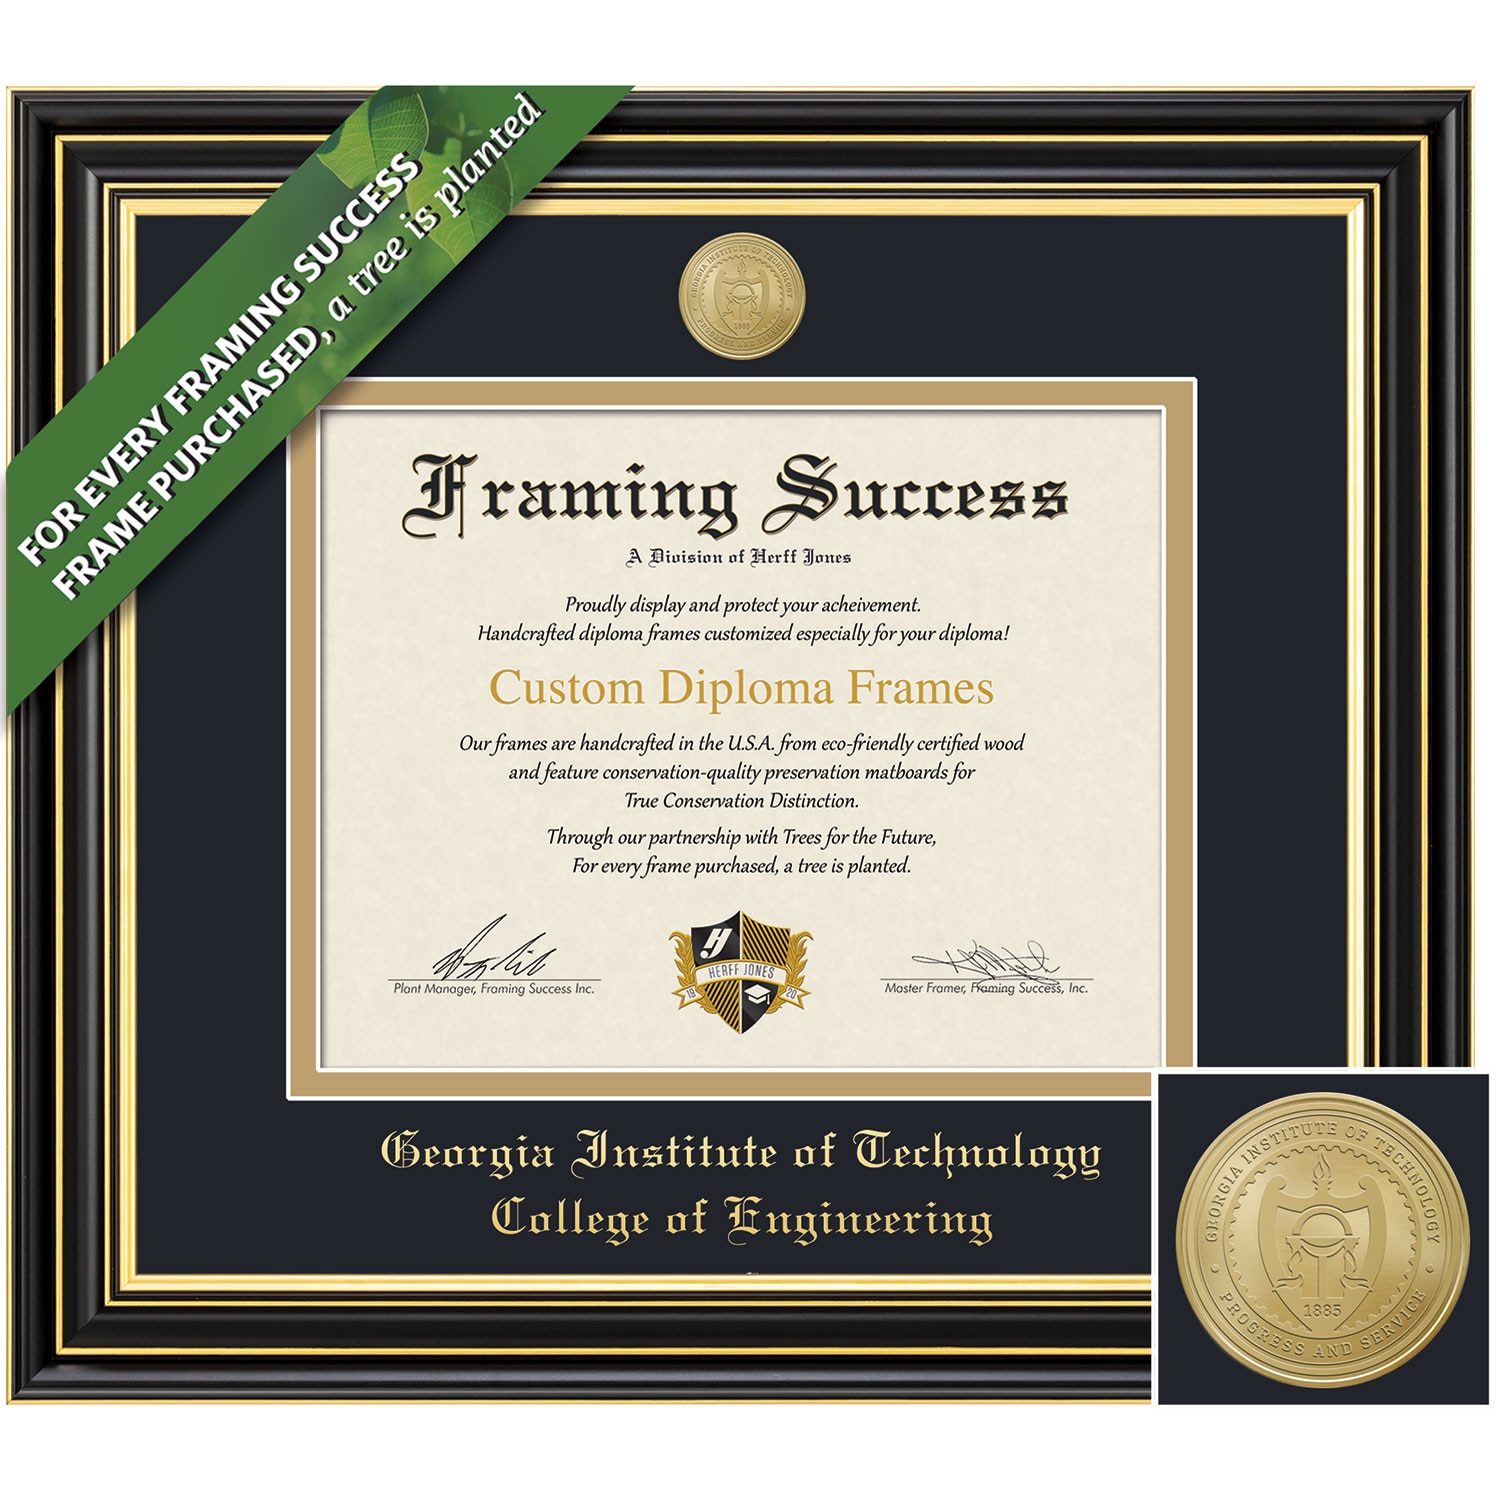 Framing Success 14 x 17 Prestige Gold Medallion Engineering Diploma Frame